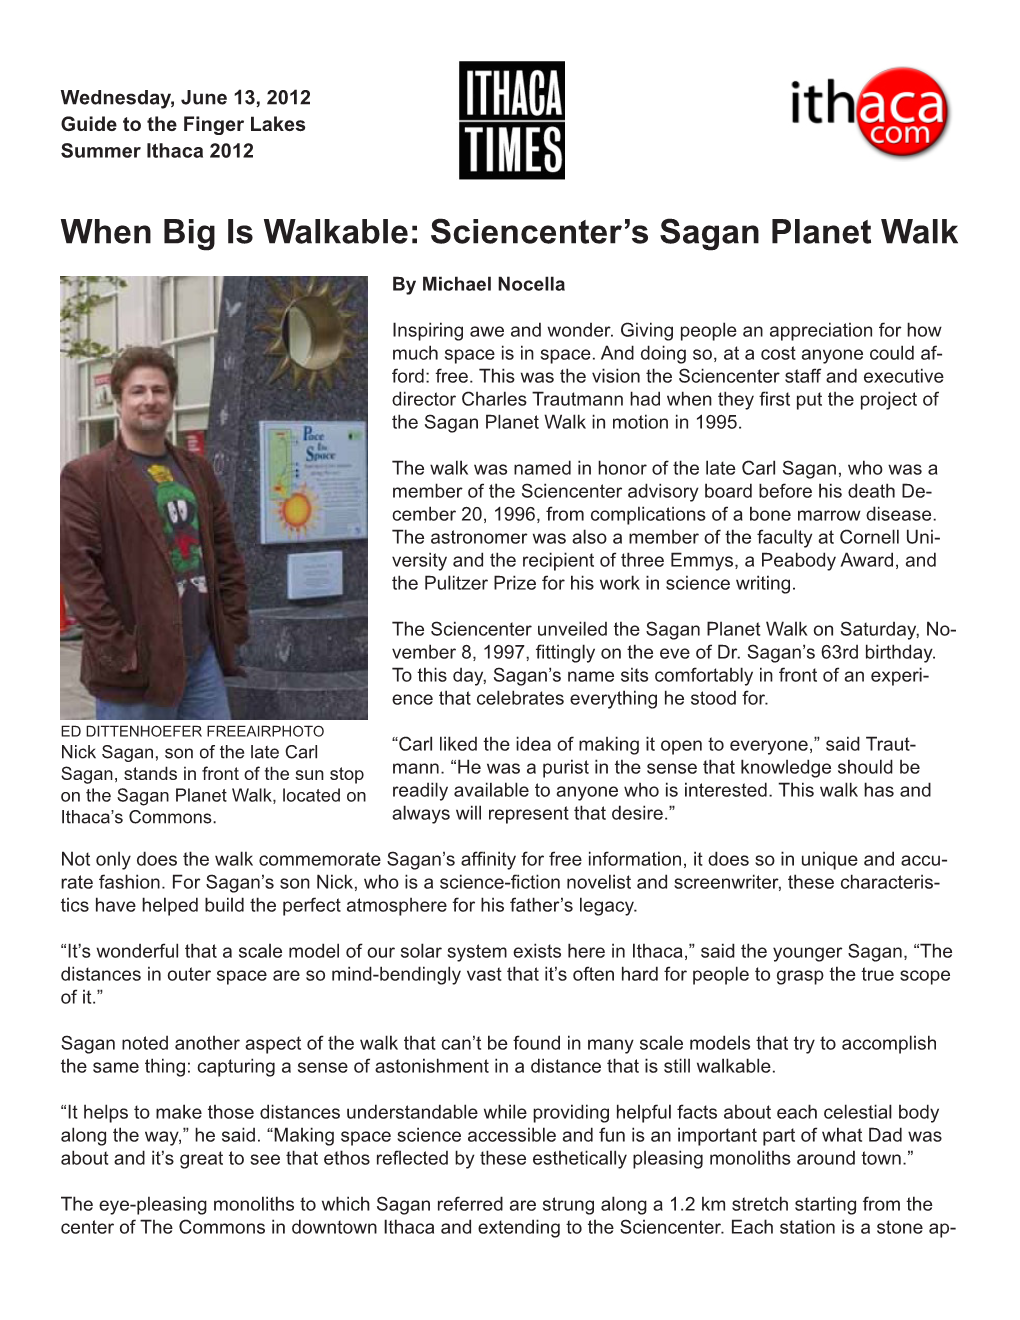 When Big Is Walkable: Sciencenter's Sagan Planet Walk